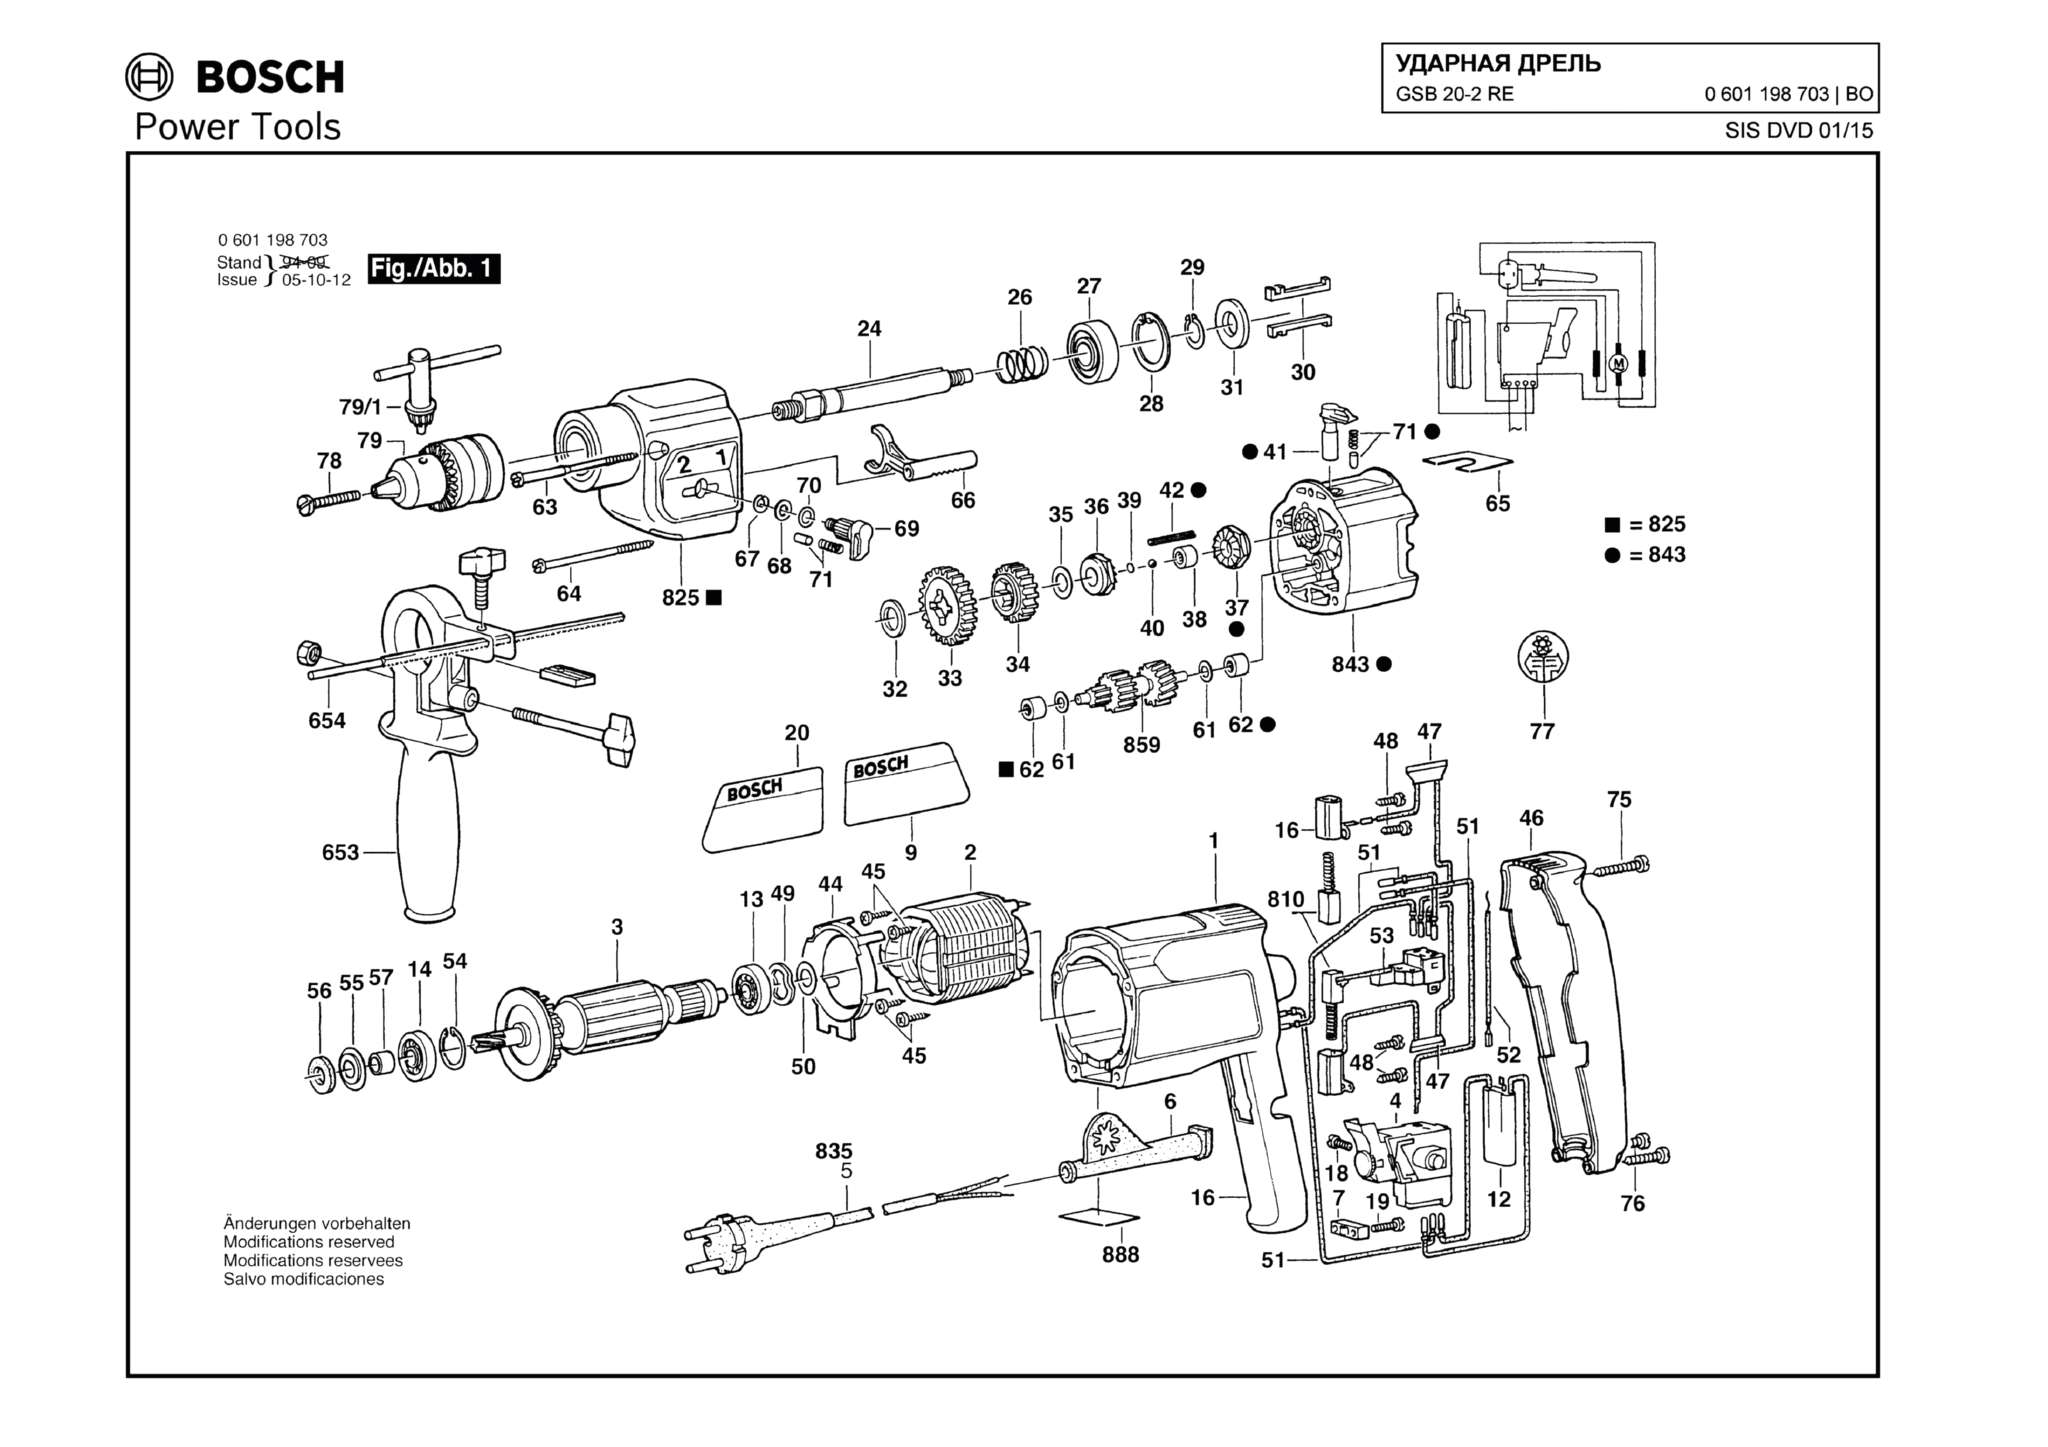 Запчасти, схема и деталировка Bosch GSB 20-2 RE (ТИП 0601198703)